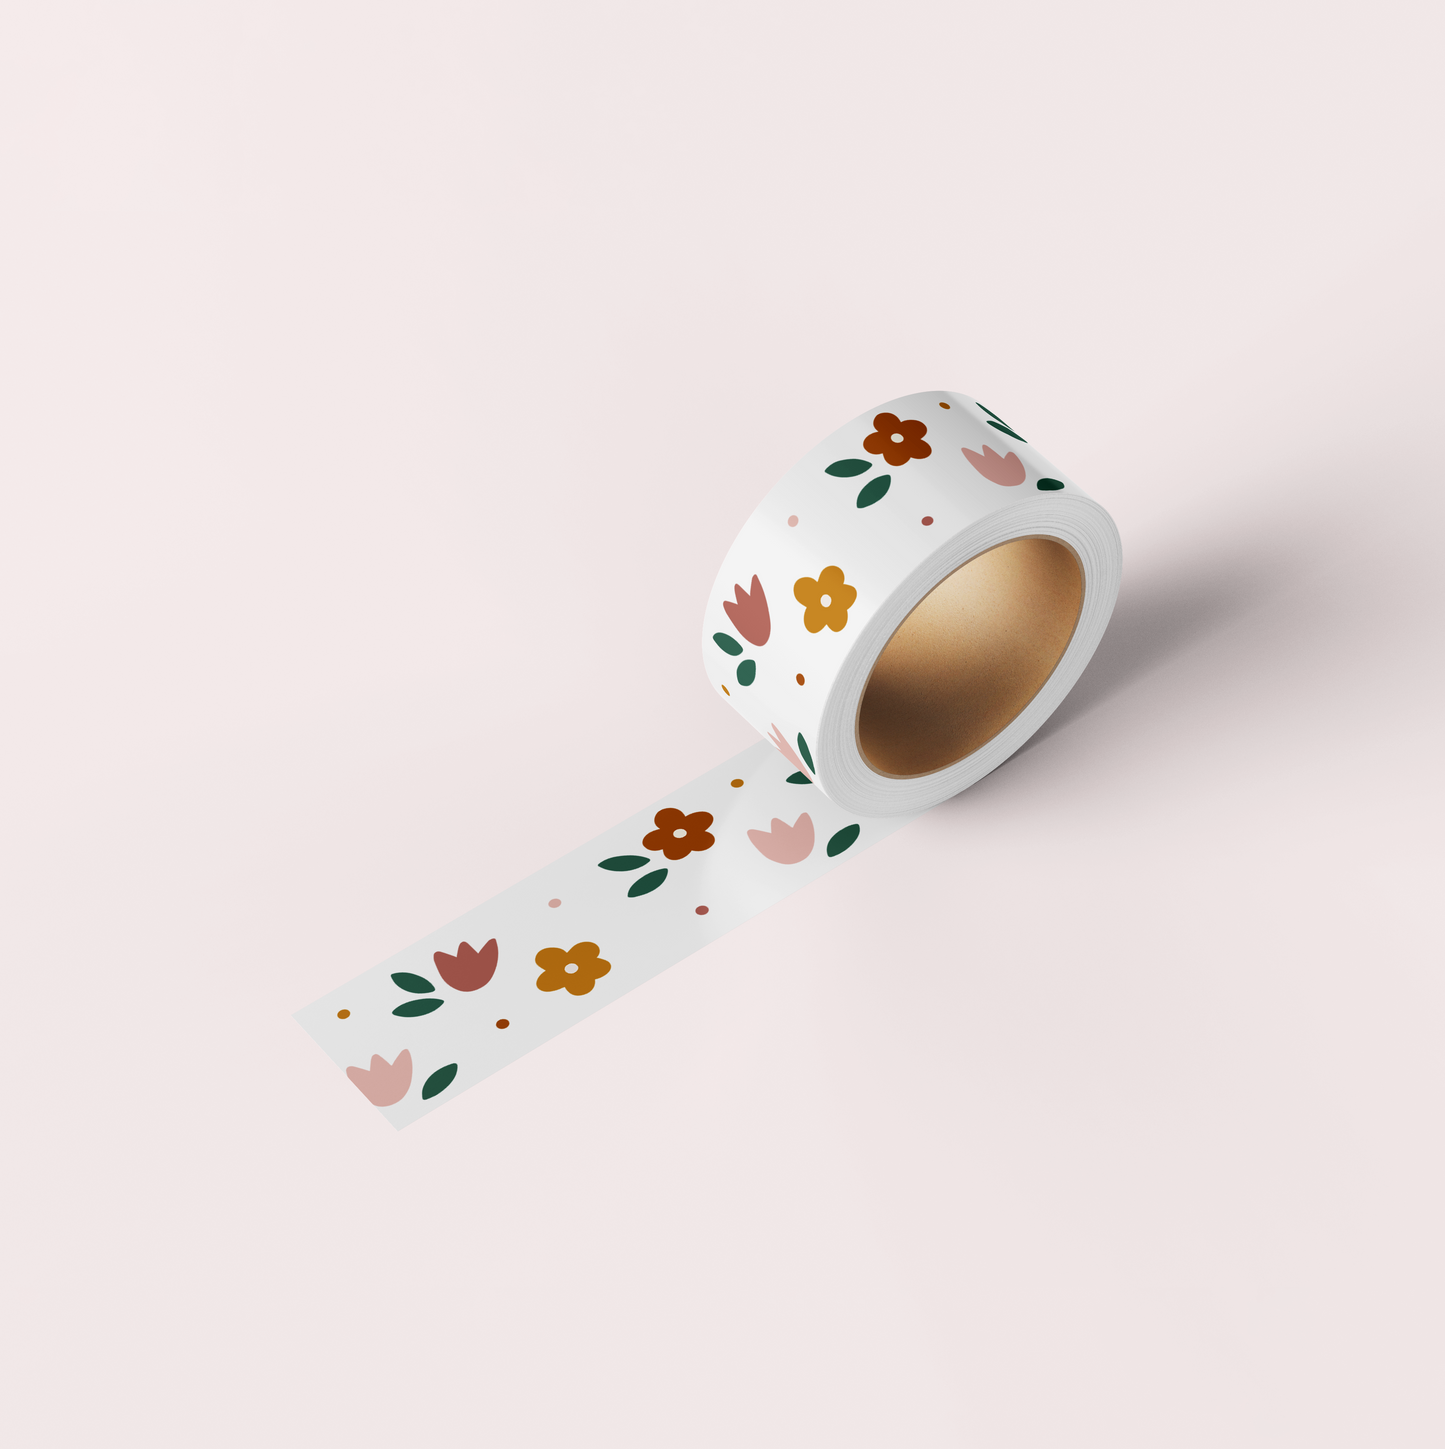 Floral Washi Tape